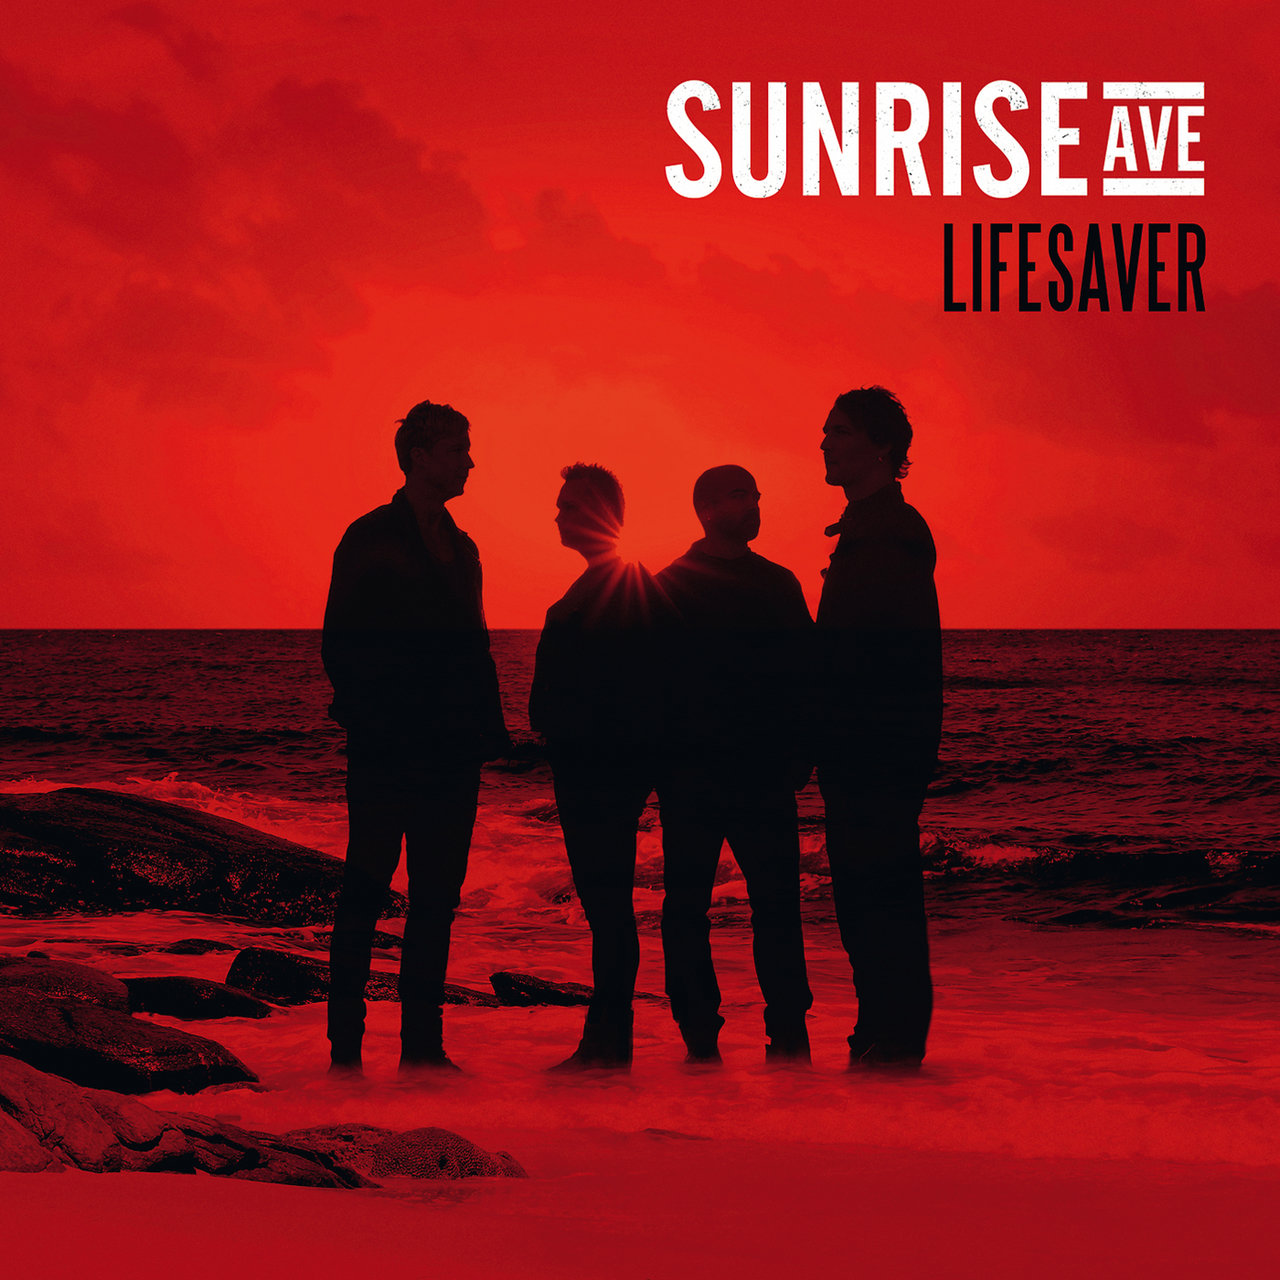 Sunrise Avenue Lifesaver cover artwork